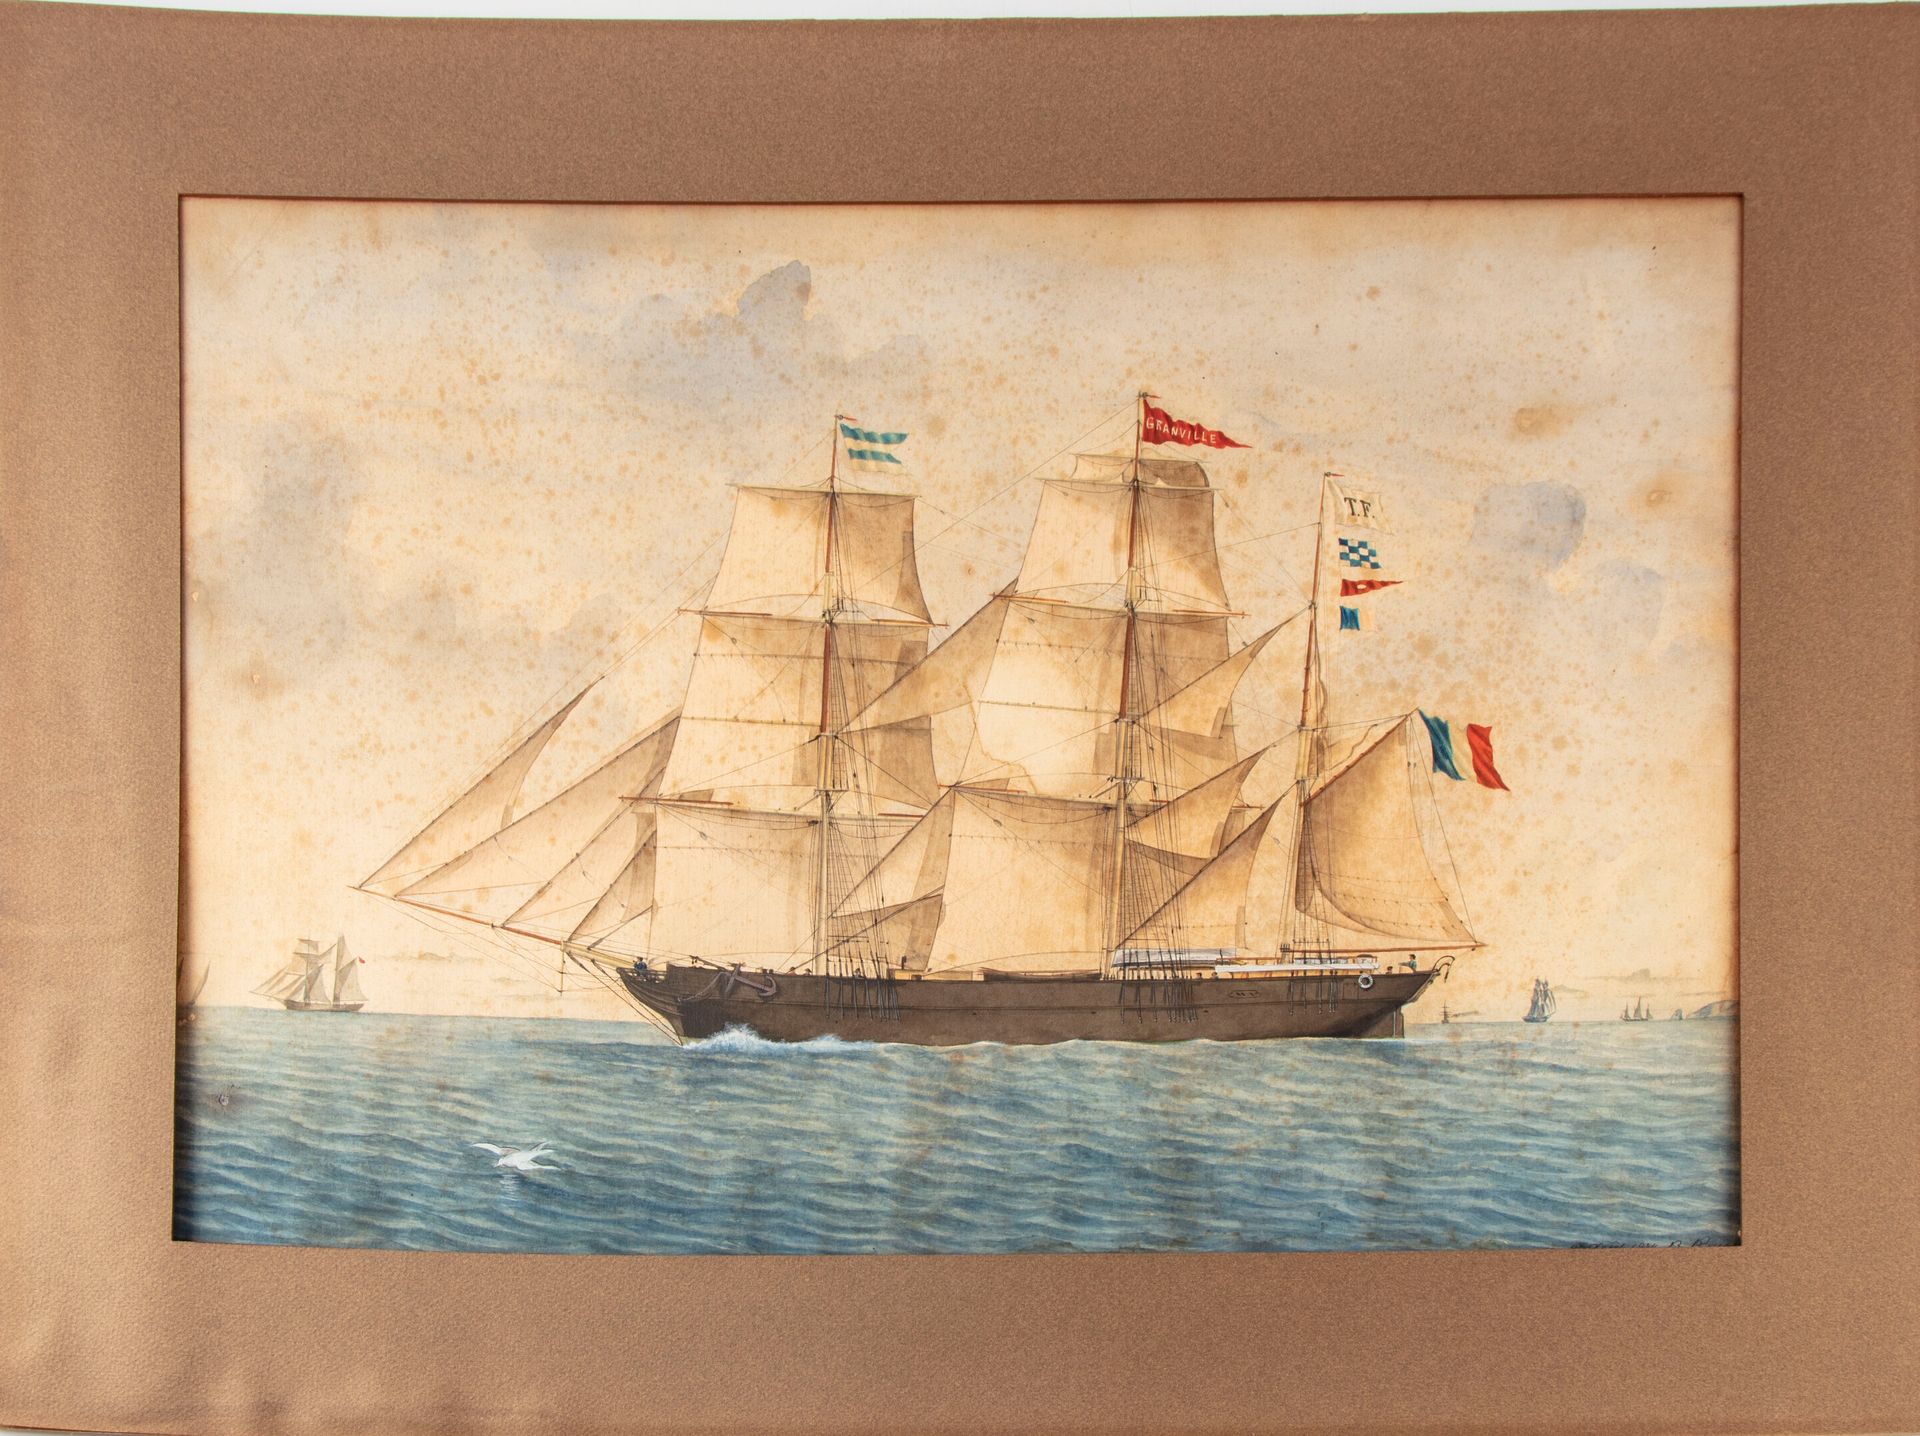 ECOLE FRANCAISE XIXè 19世纪法国学校

帆船，格兰维尔号

纸上水彩画贴在纸板上，右下角有签名和日期

42 x 60厘米